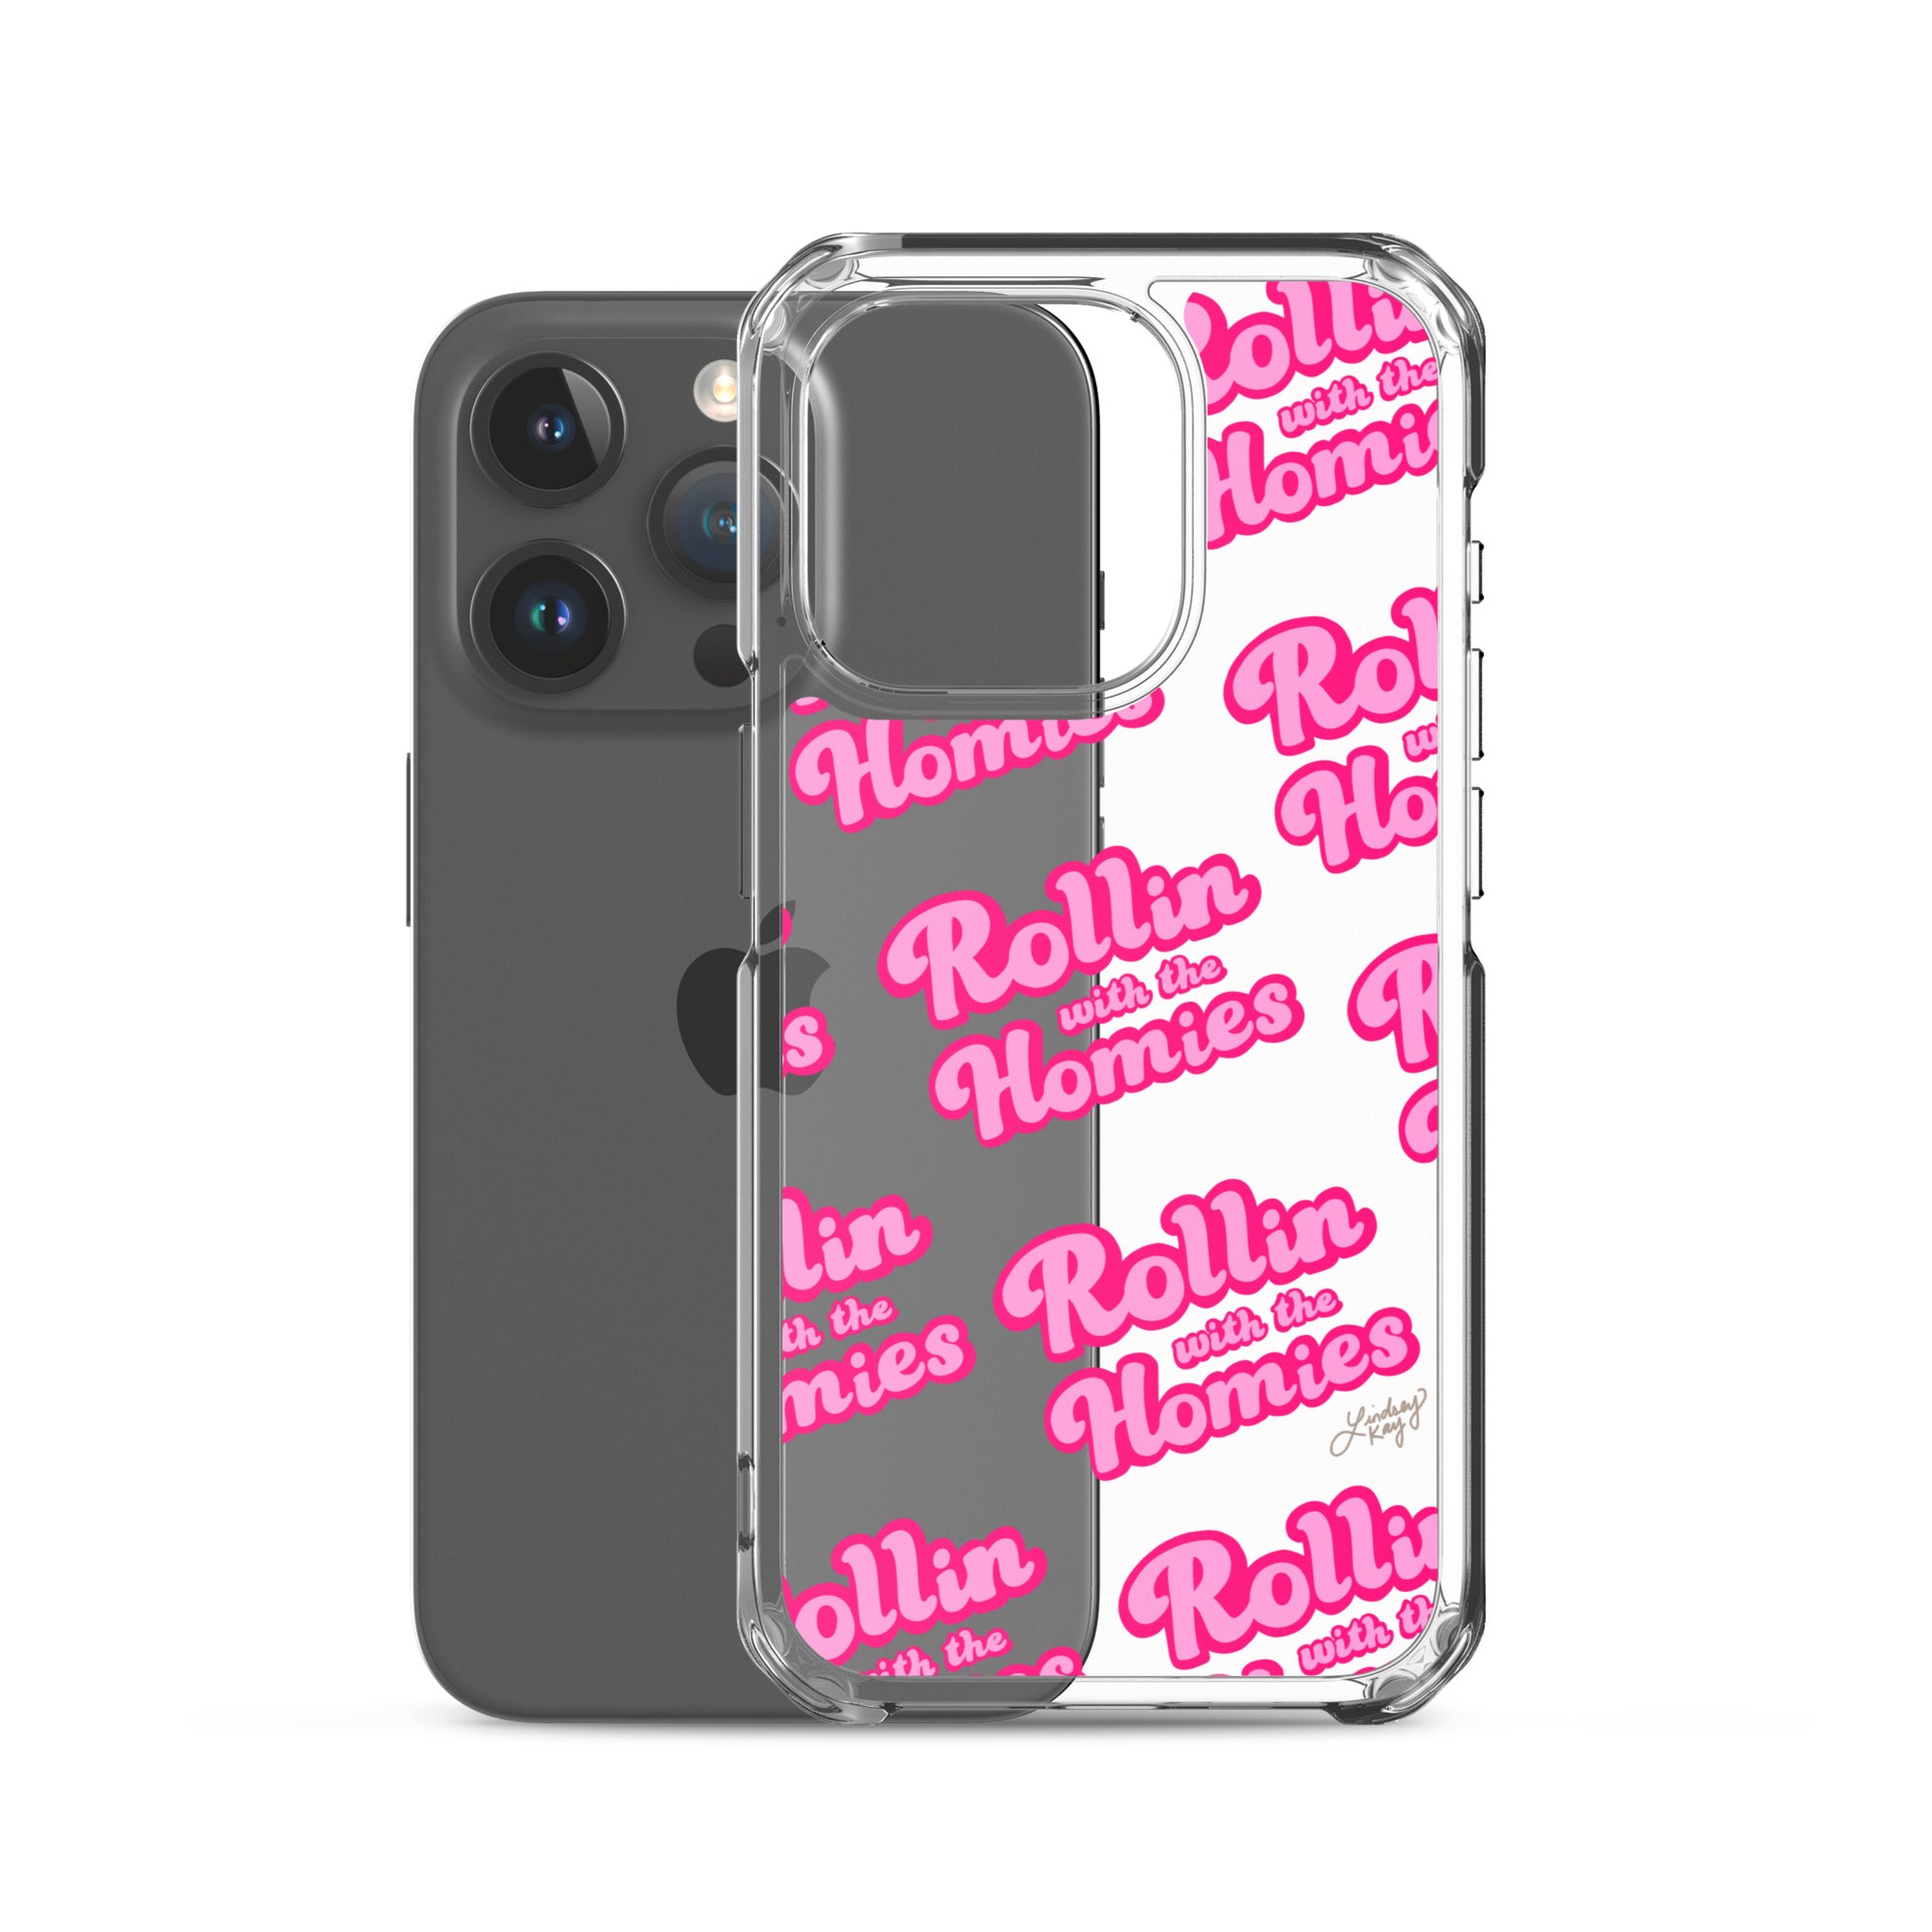 Rollin With the Homies - Funda transparente para iPhone®